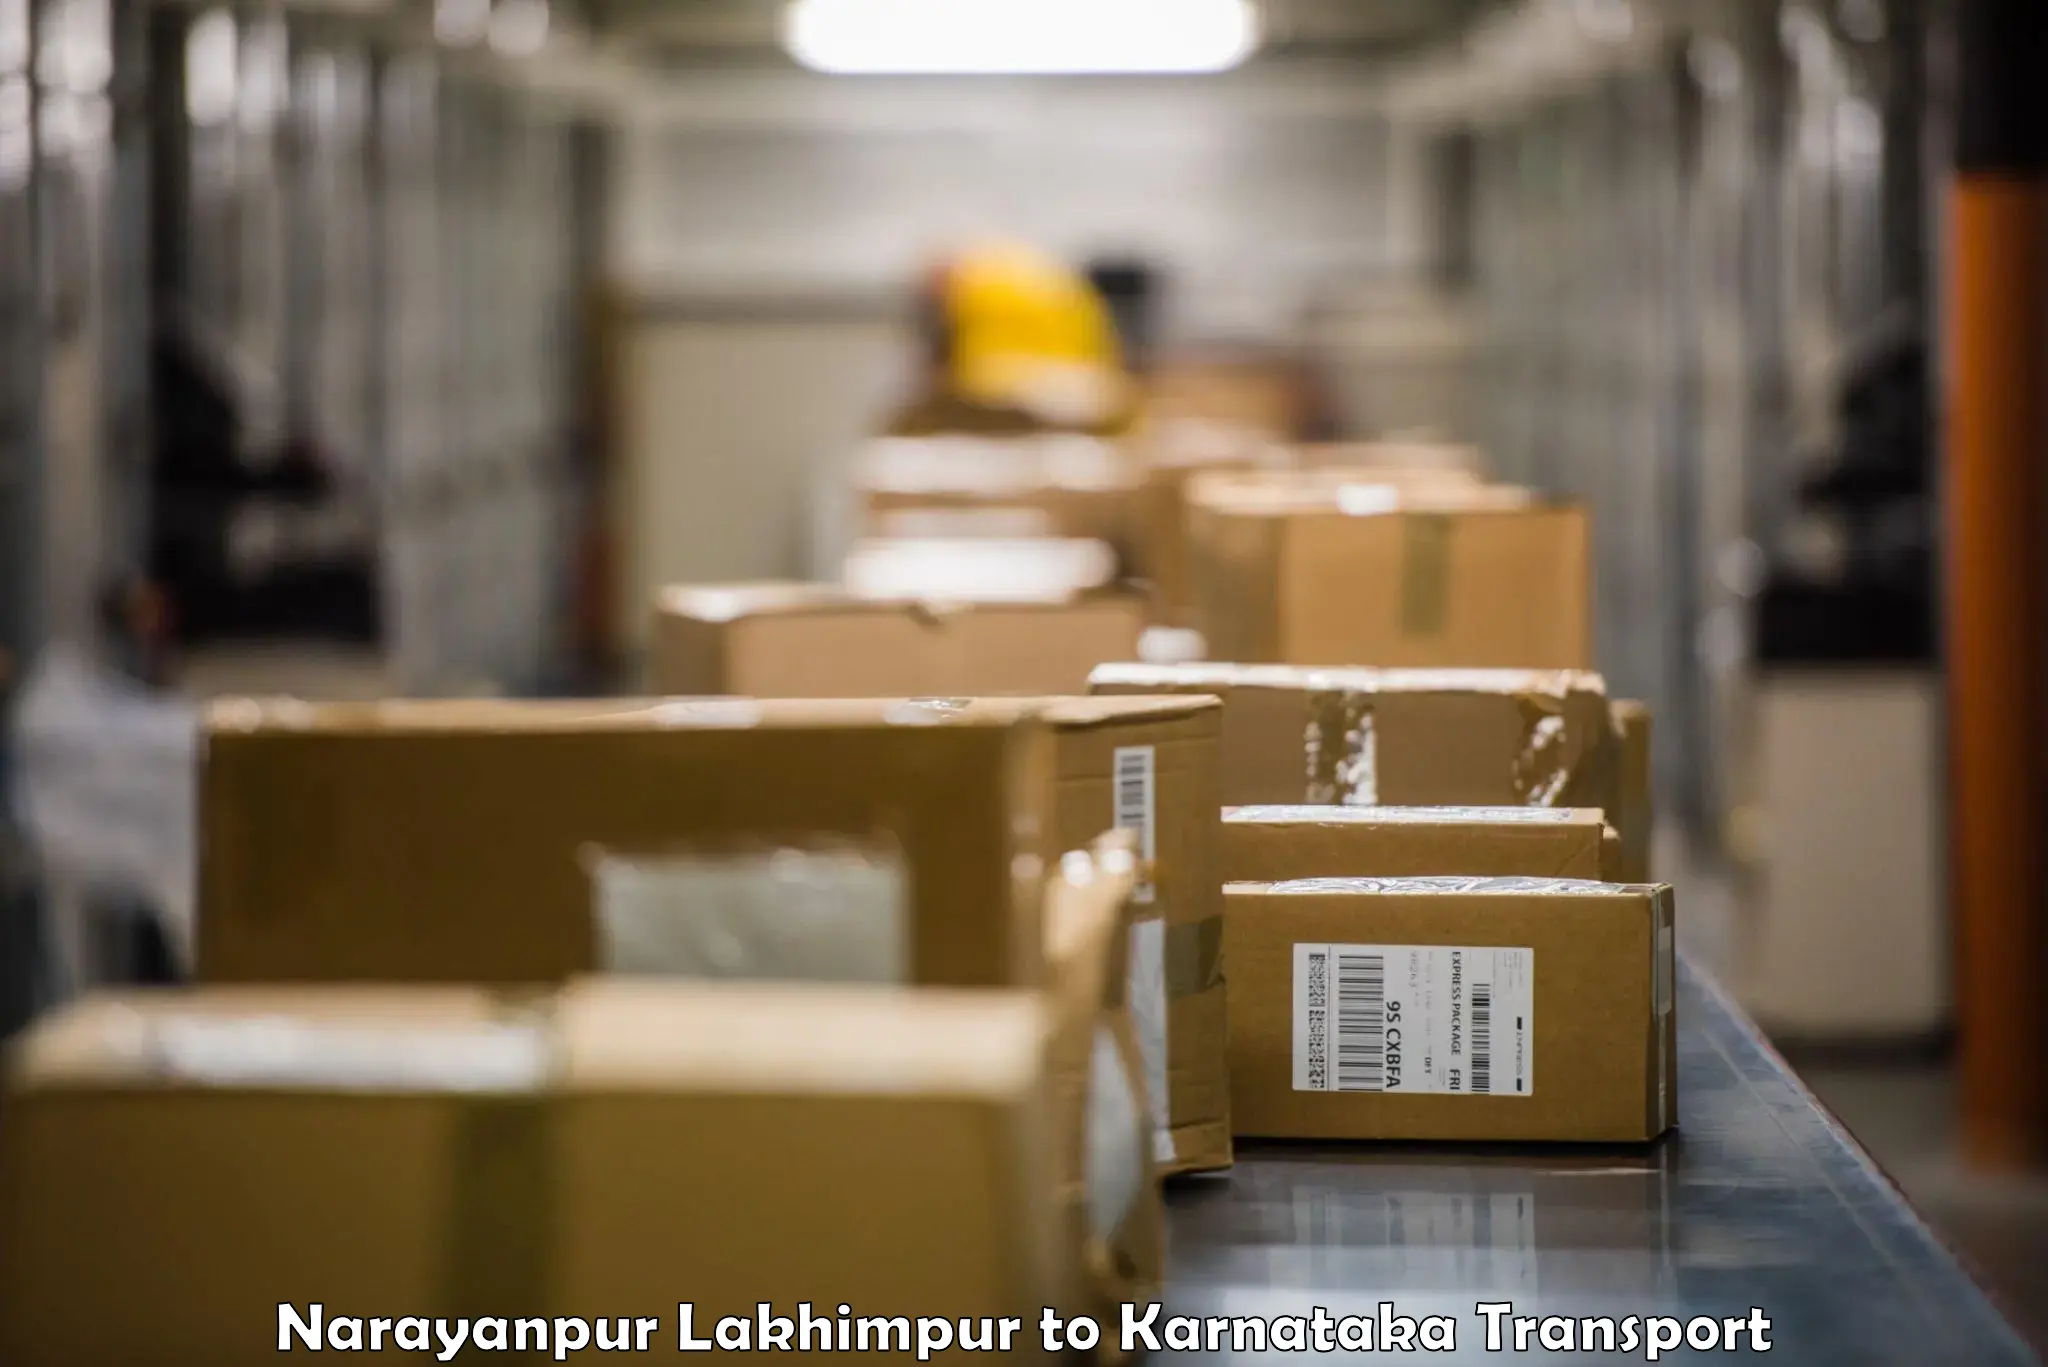 Truck transport companies in India Narayanpur Lakhimpur to Uttara Kannada